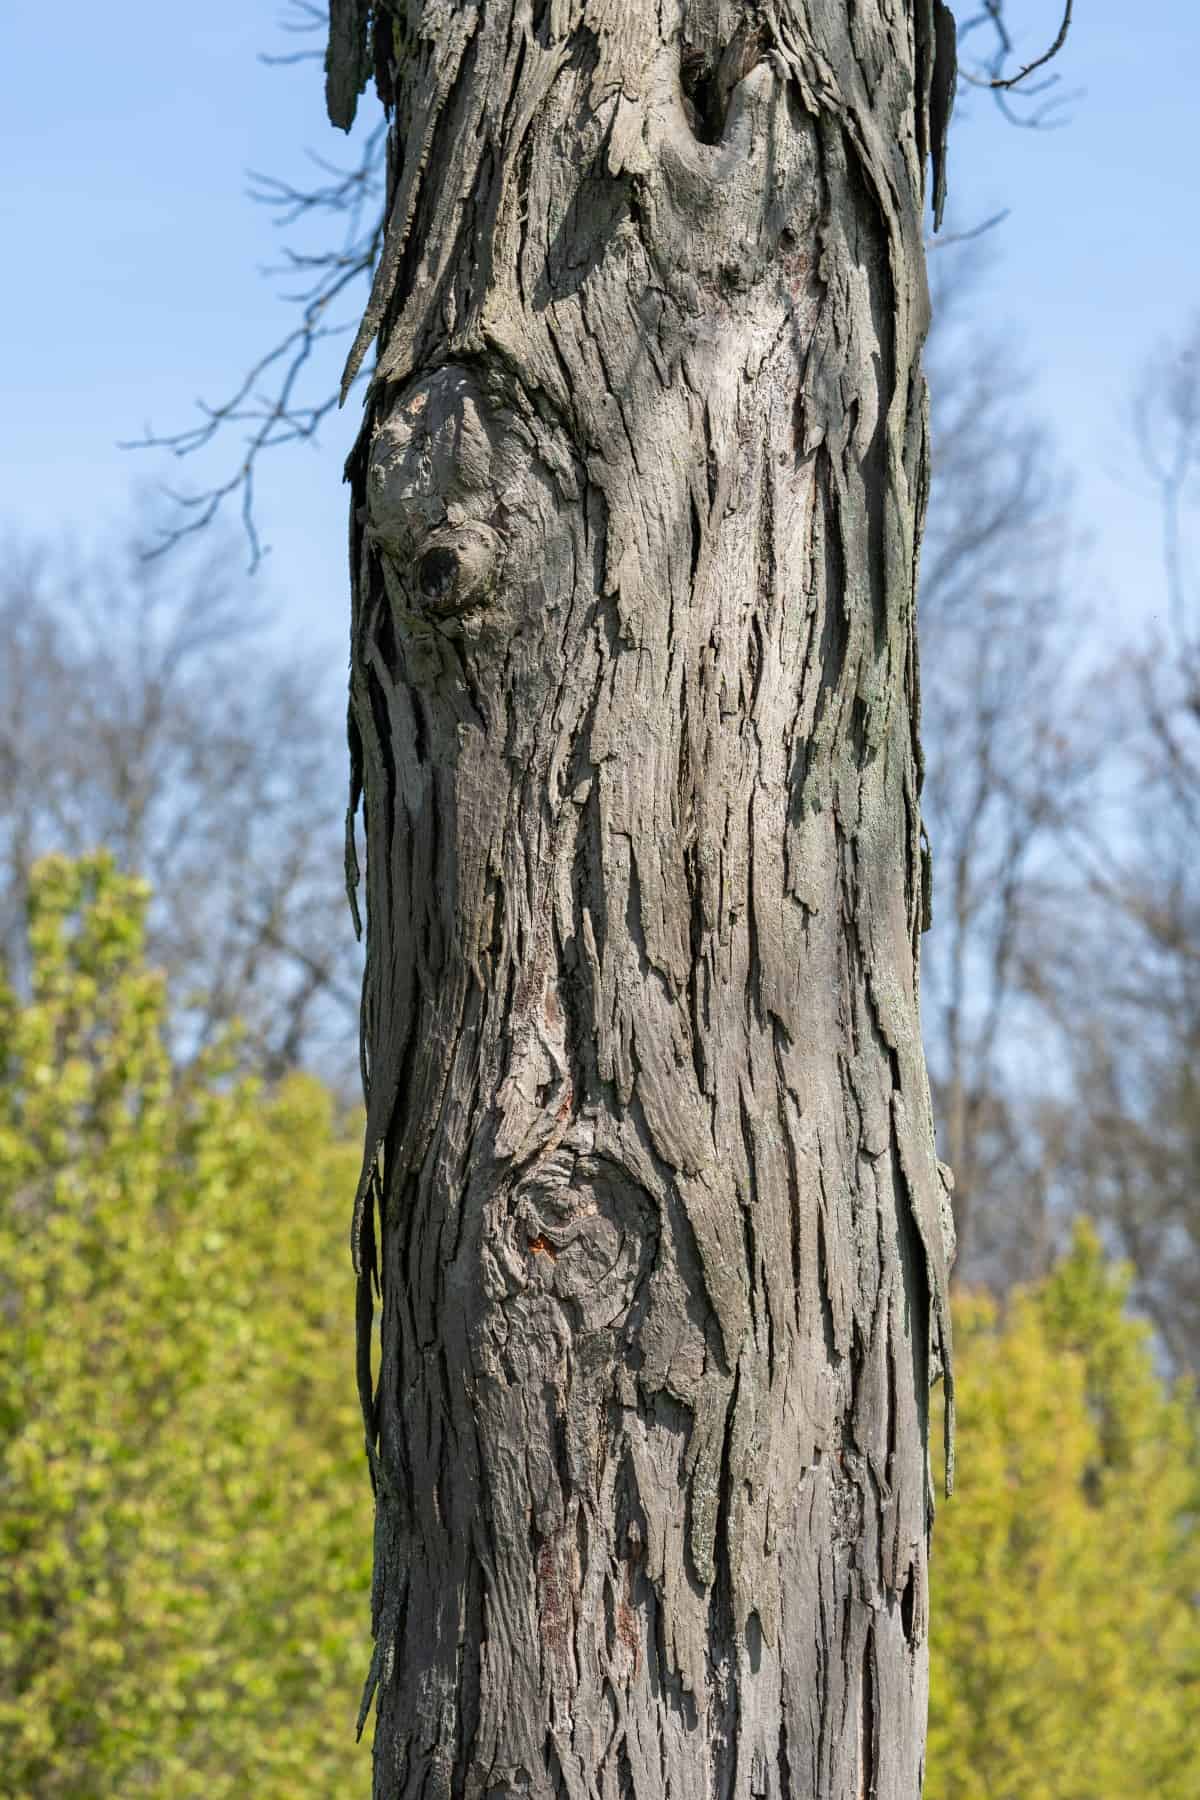 Close up of a shellbark hickory tree trunk and bark